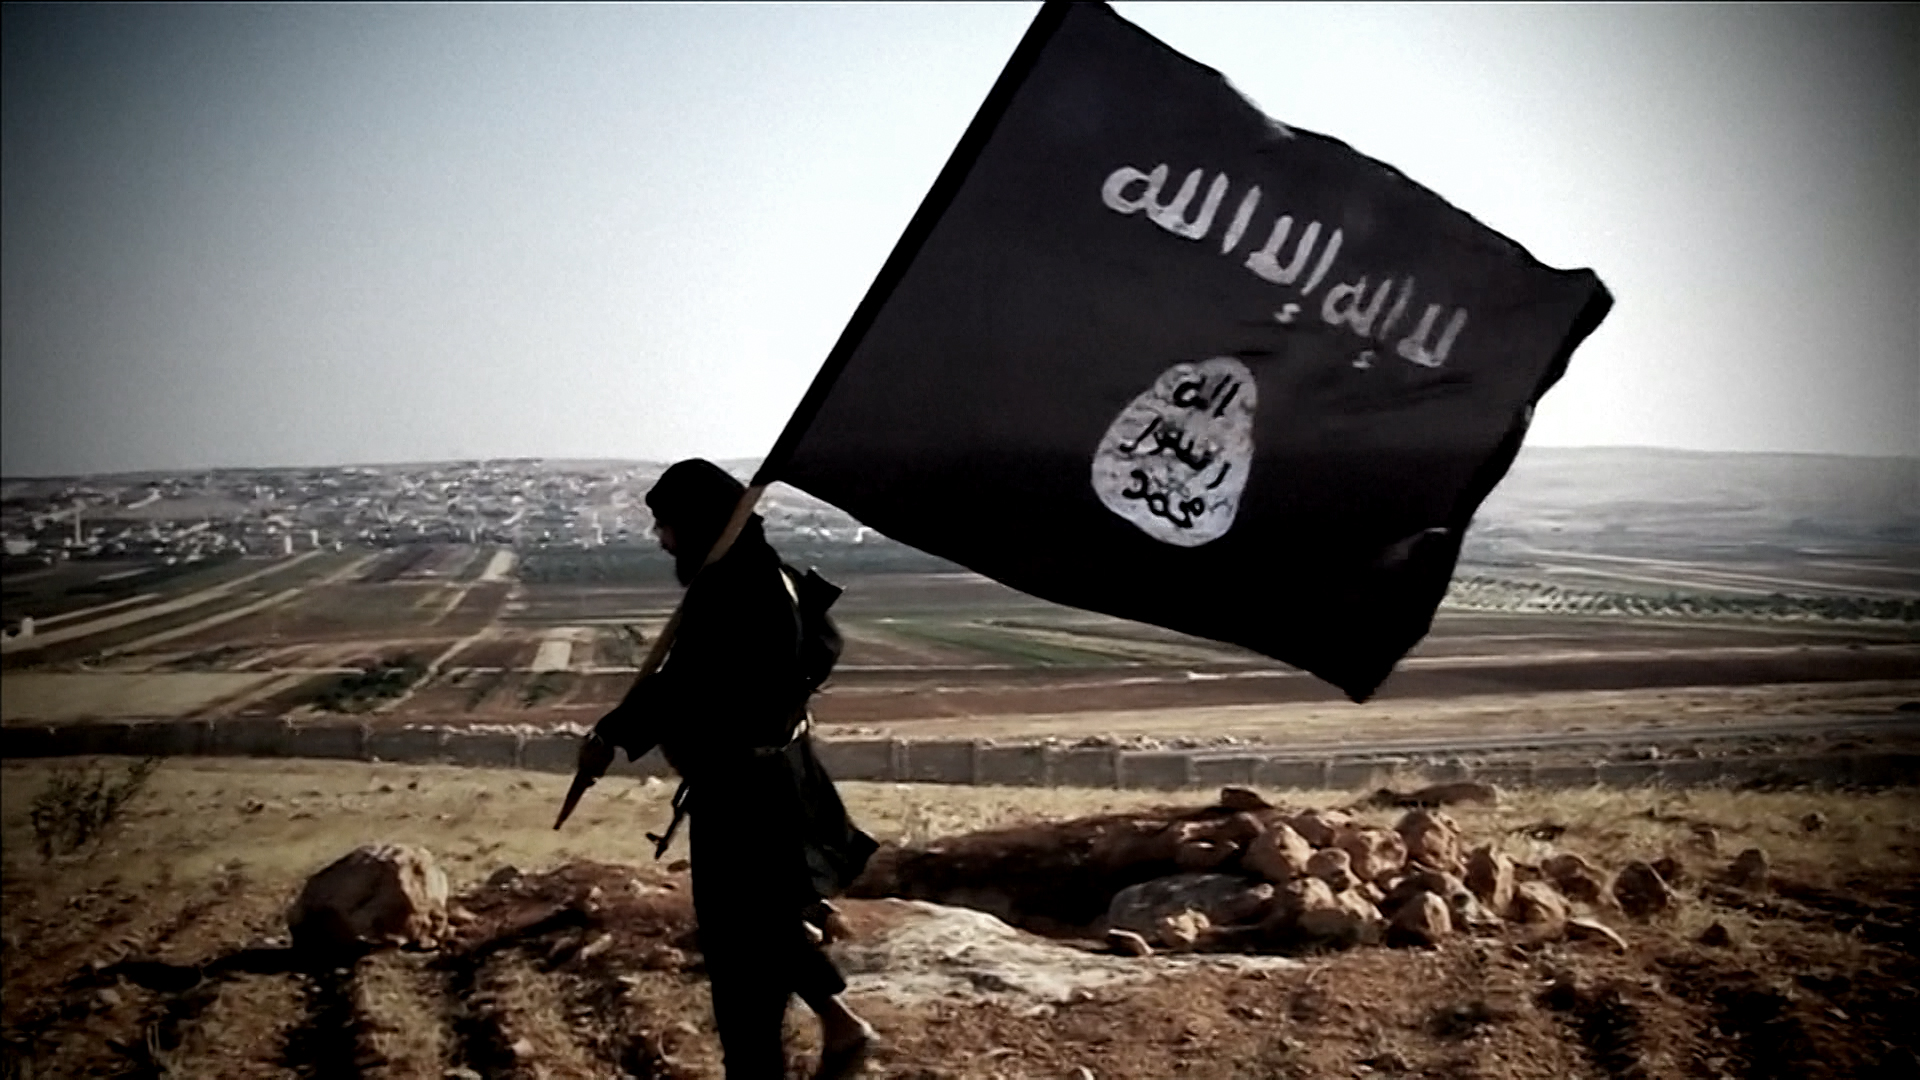 Имеет иг. Флаг МТО ИГИЛ. Флаг Исламского государства.